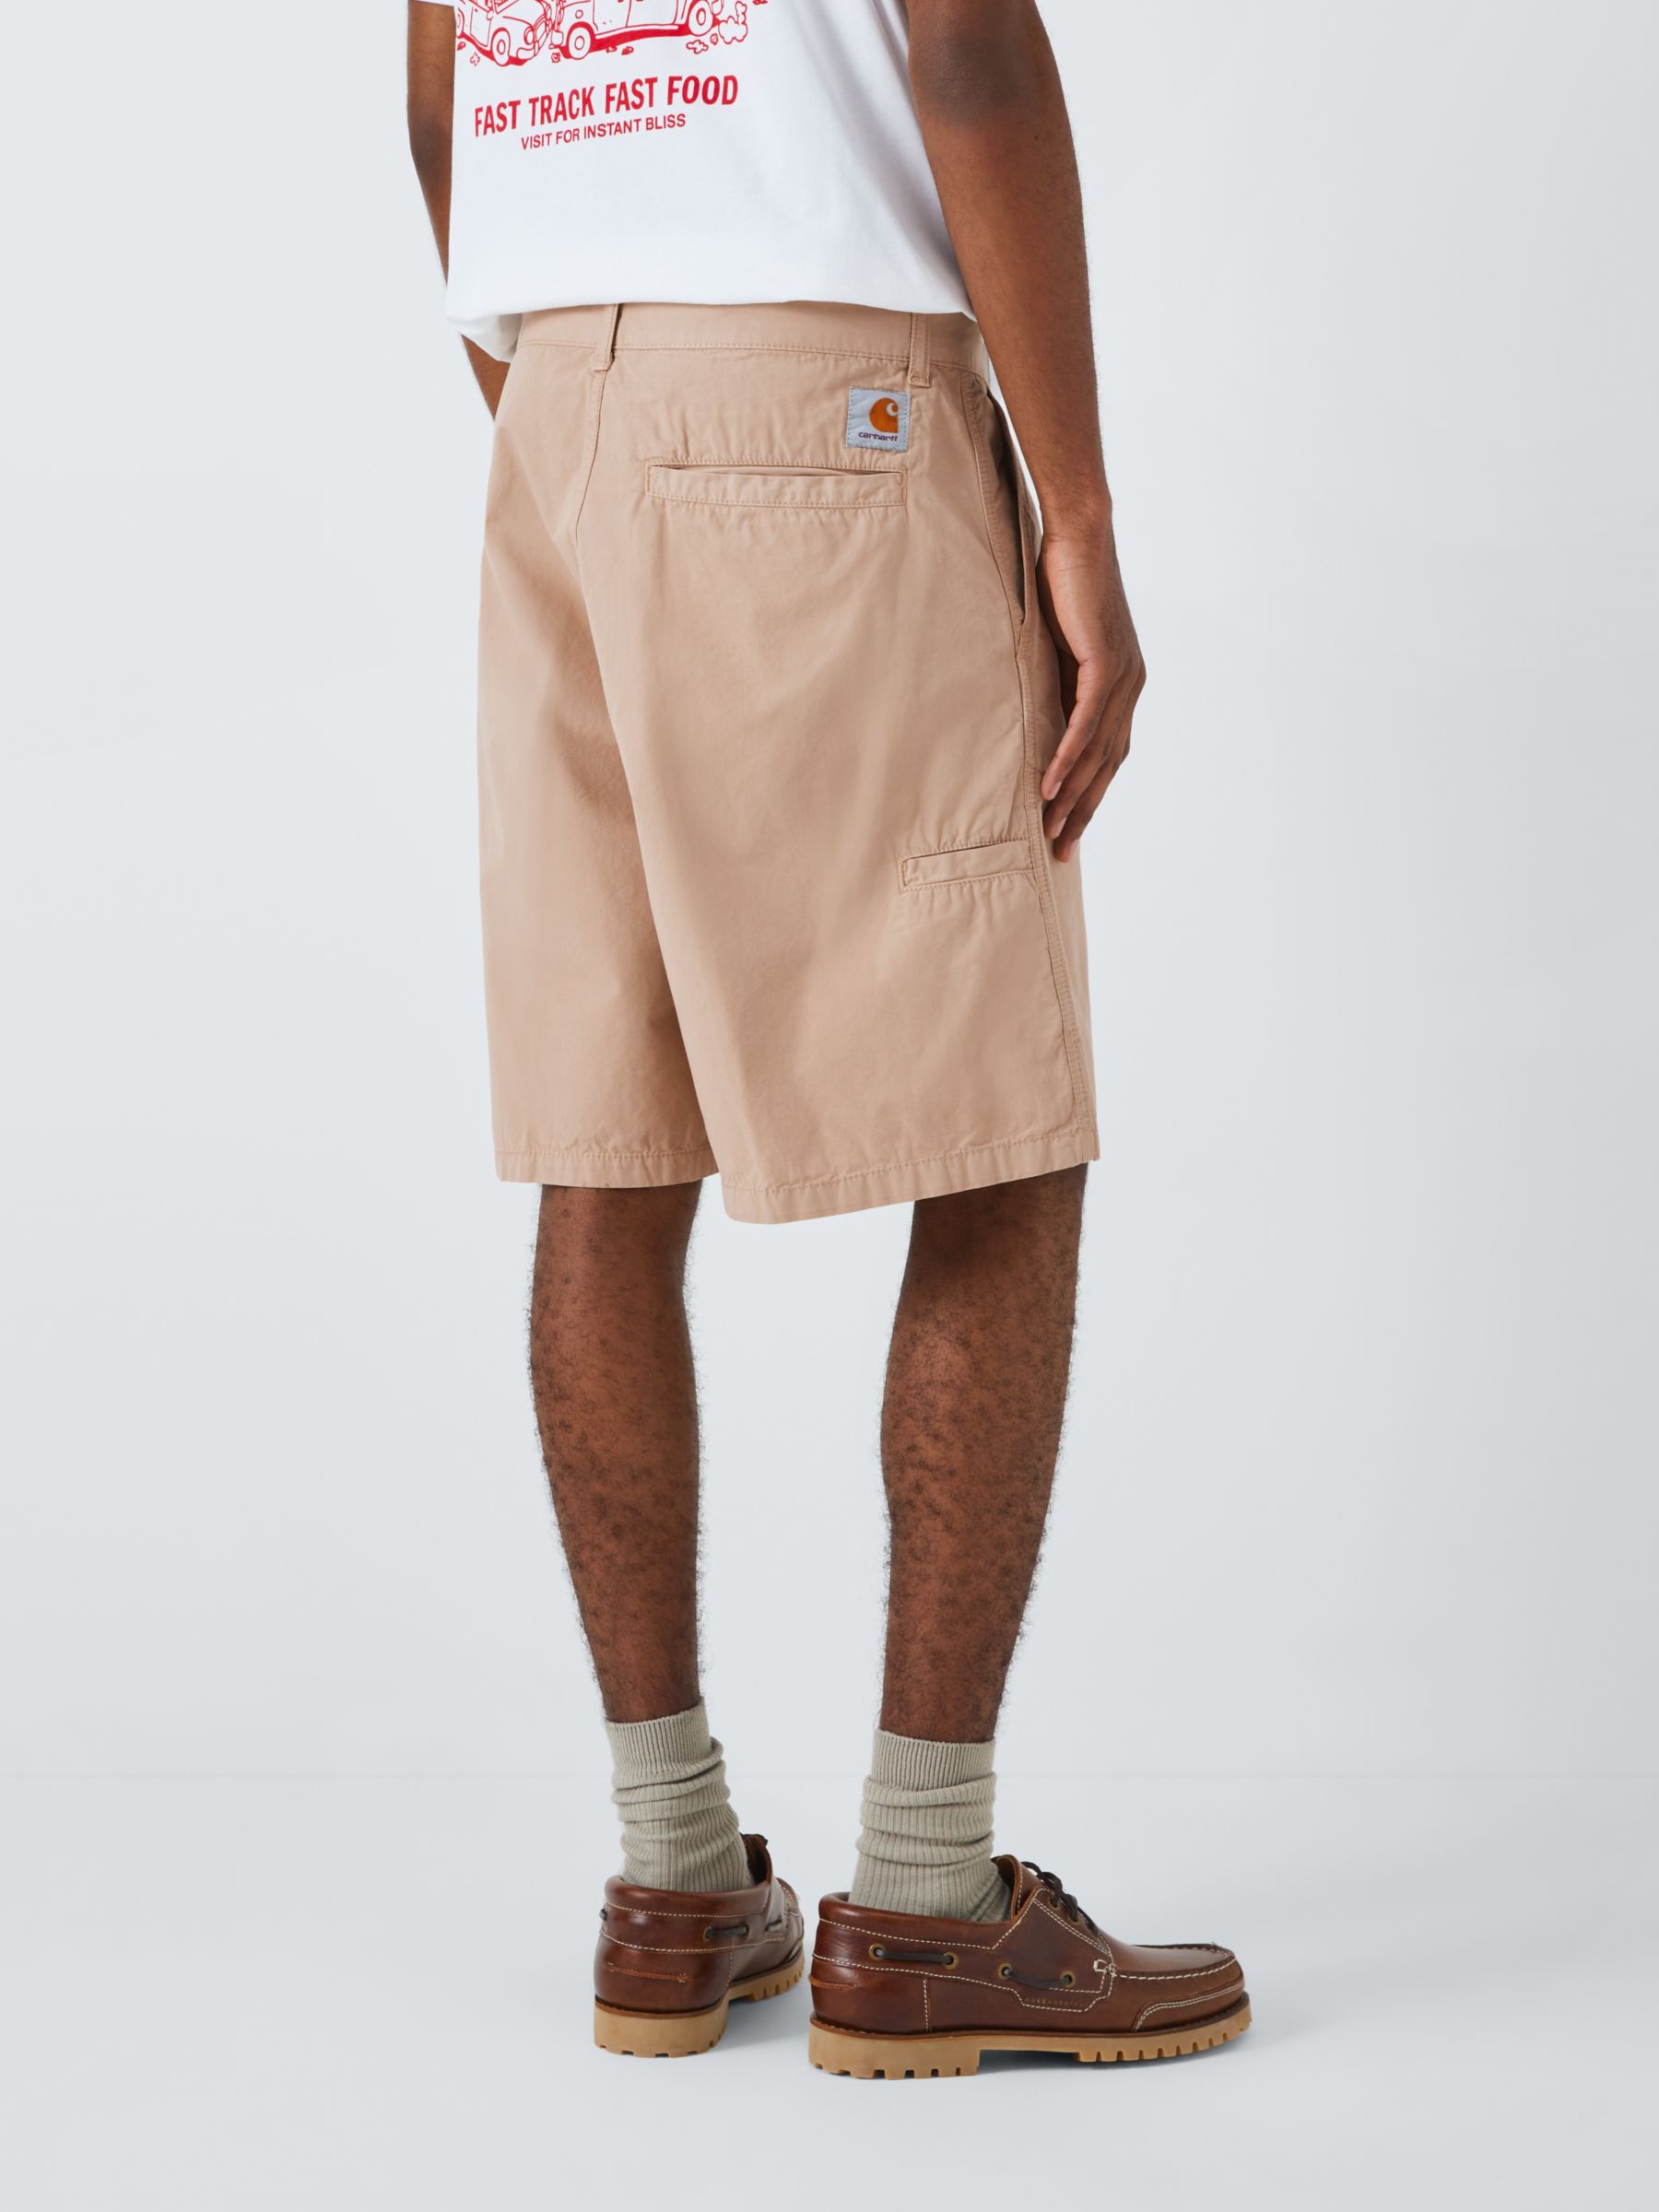 Carhartt WIP Colston Shorts, Brown, 38R